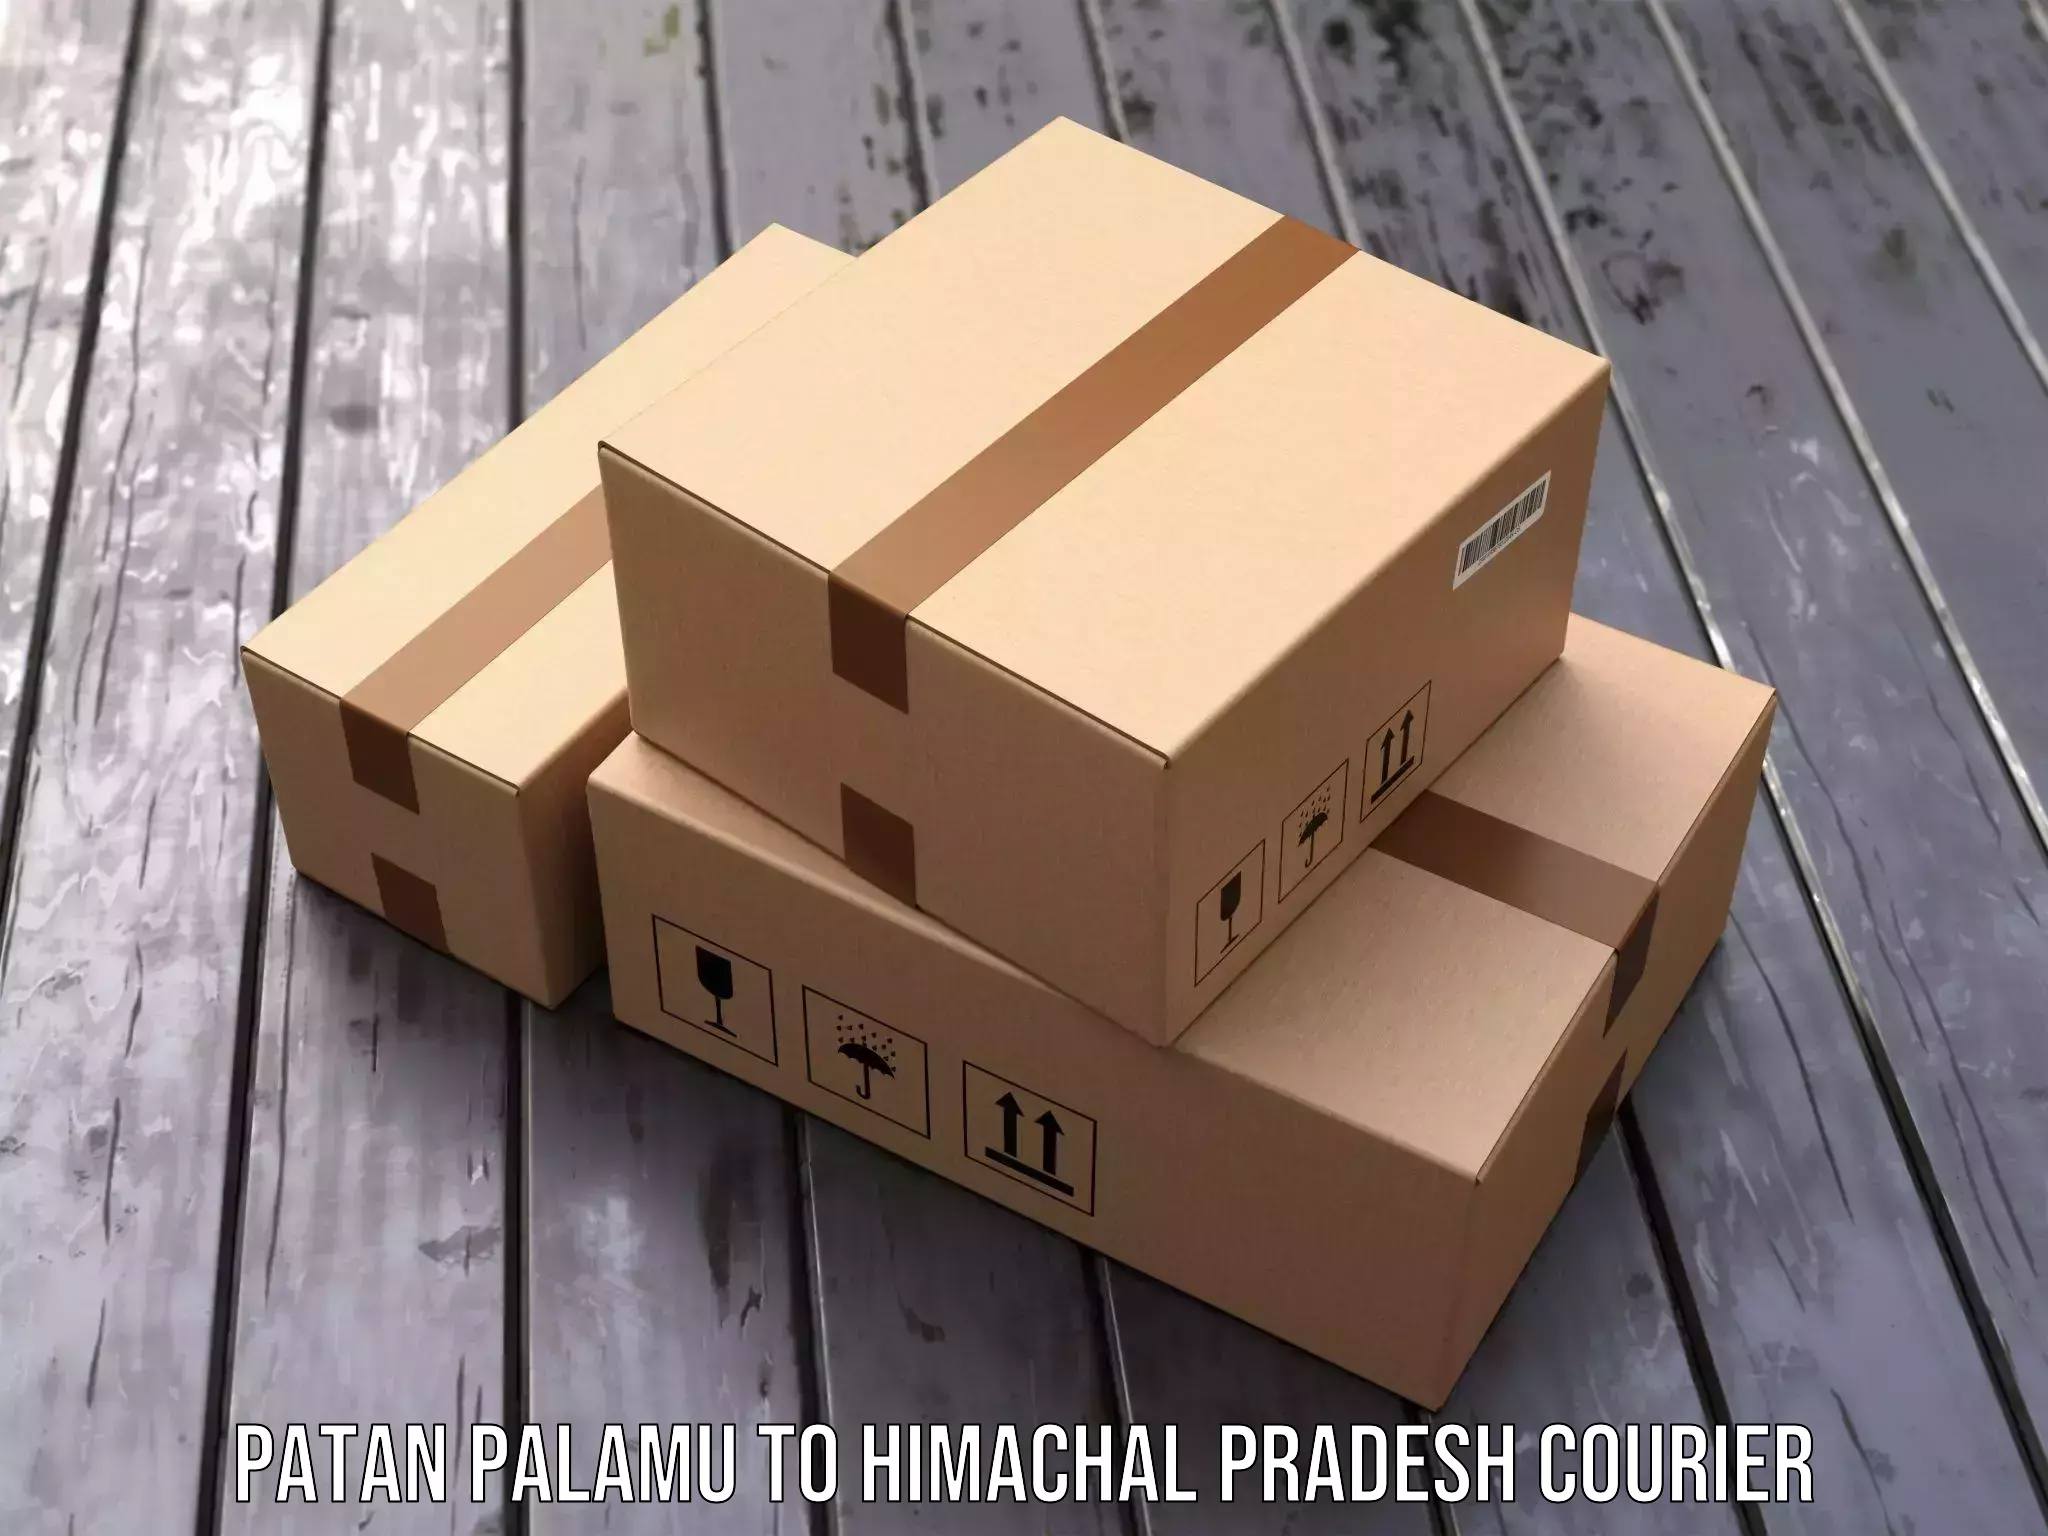 User-friendly courier app Patan Palamu to Amb Una